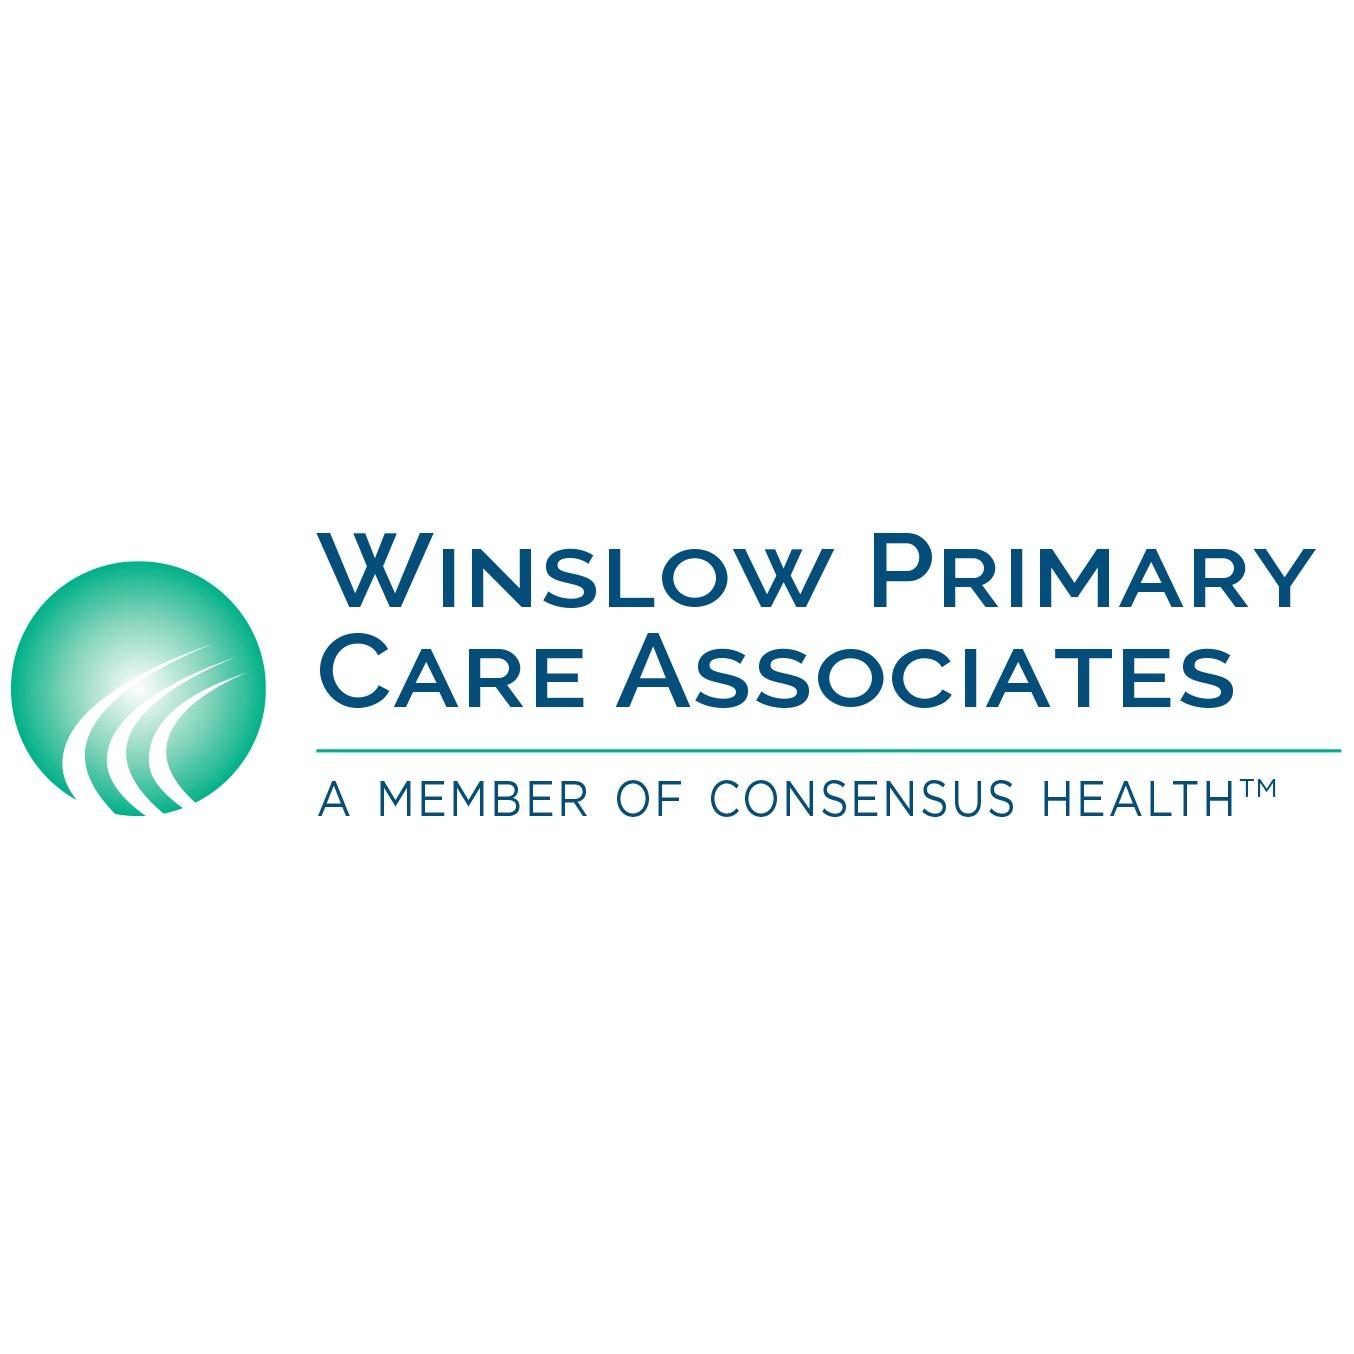 Winslow Primary Care Associates